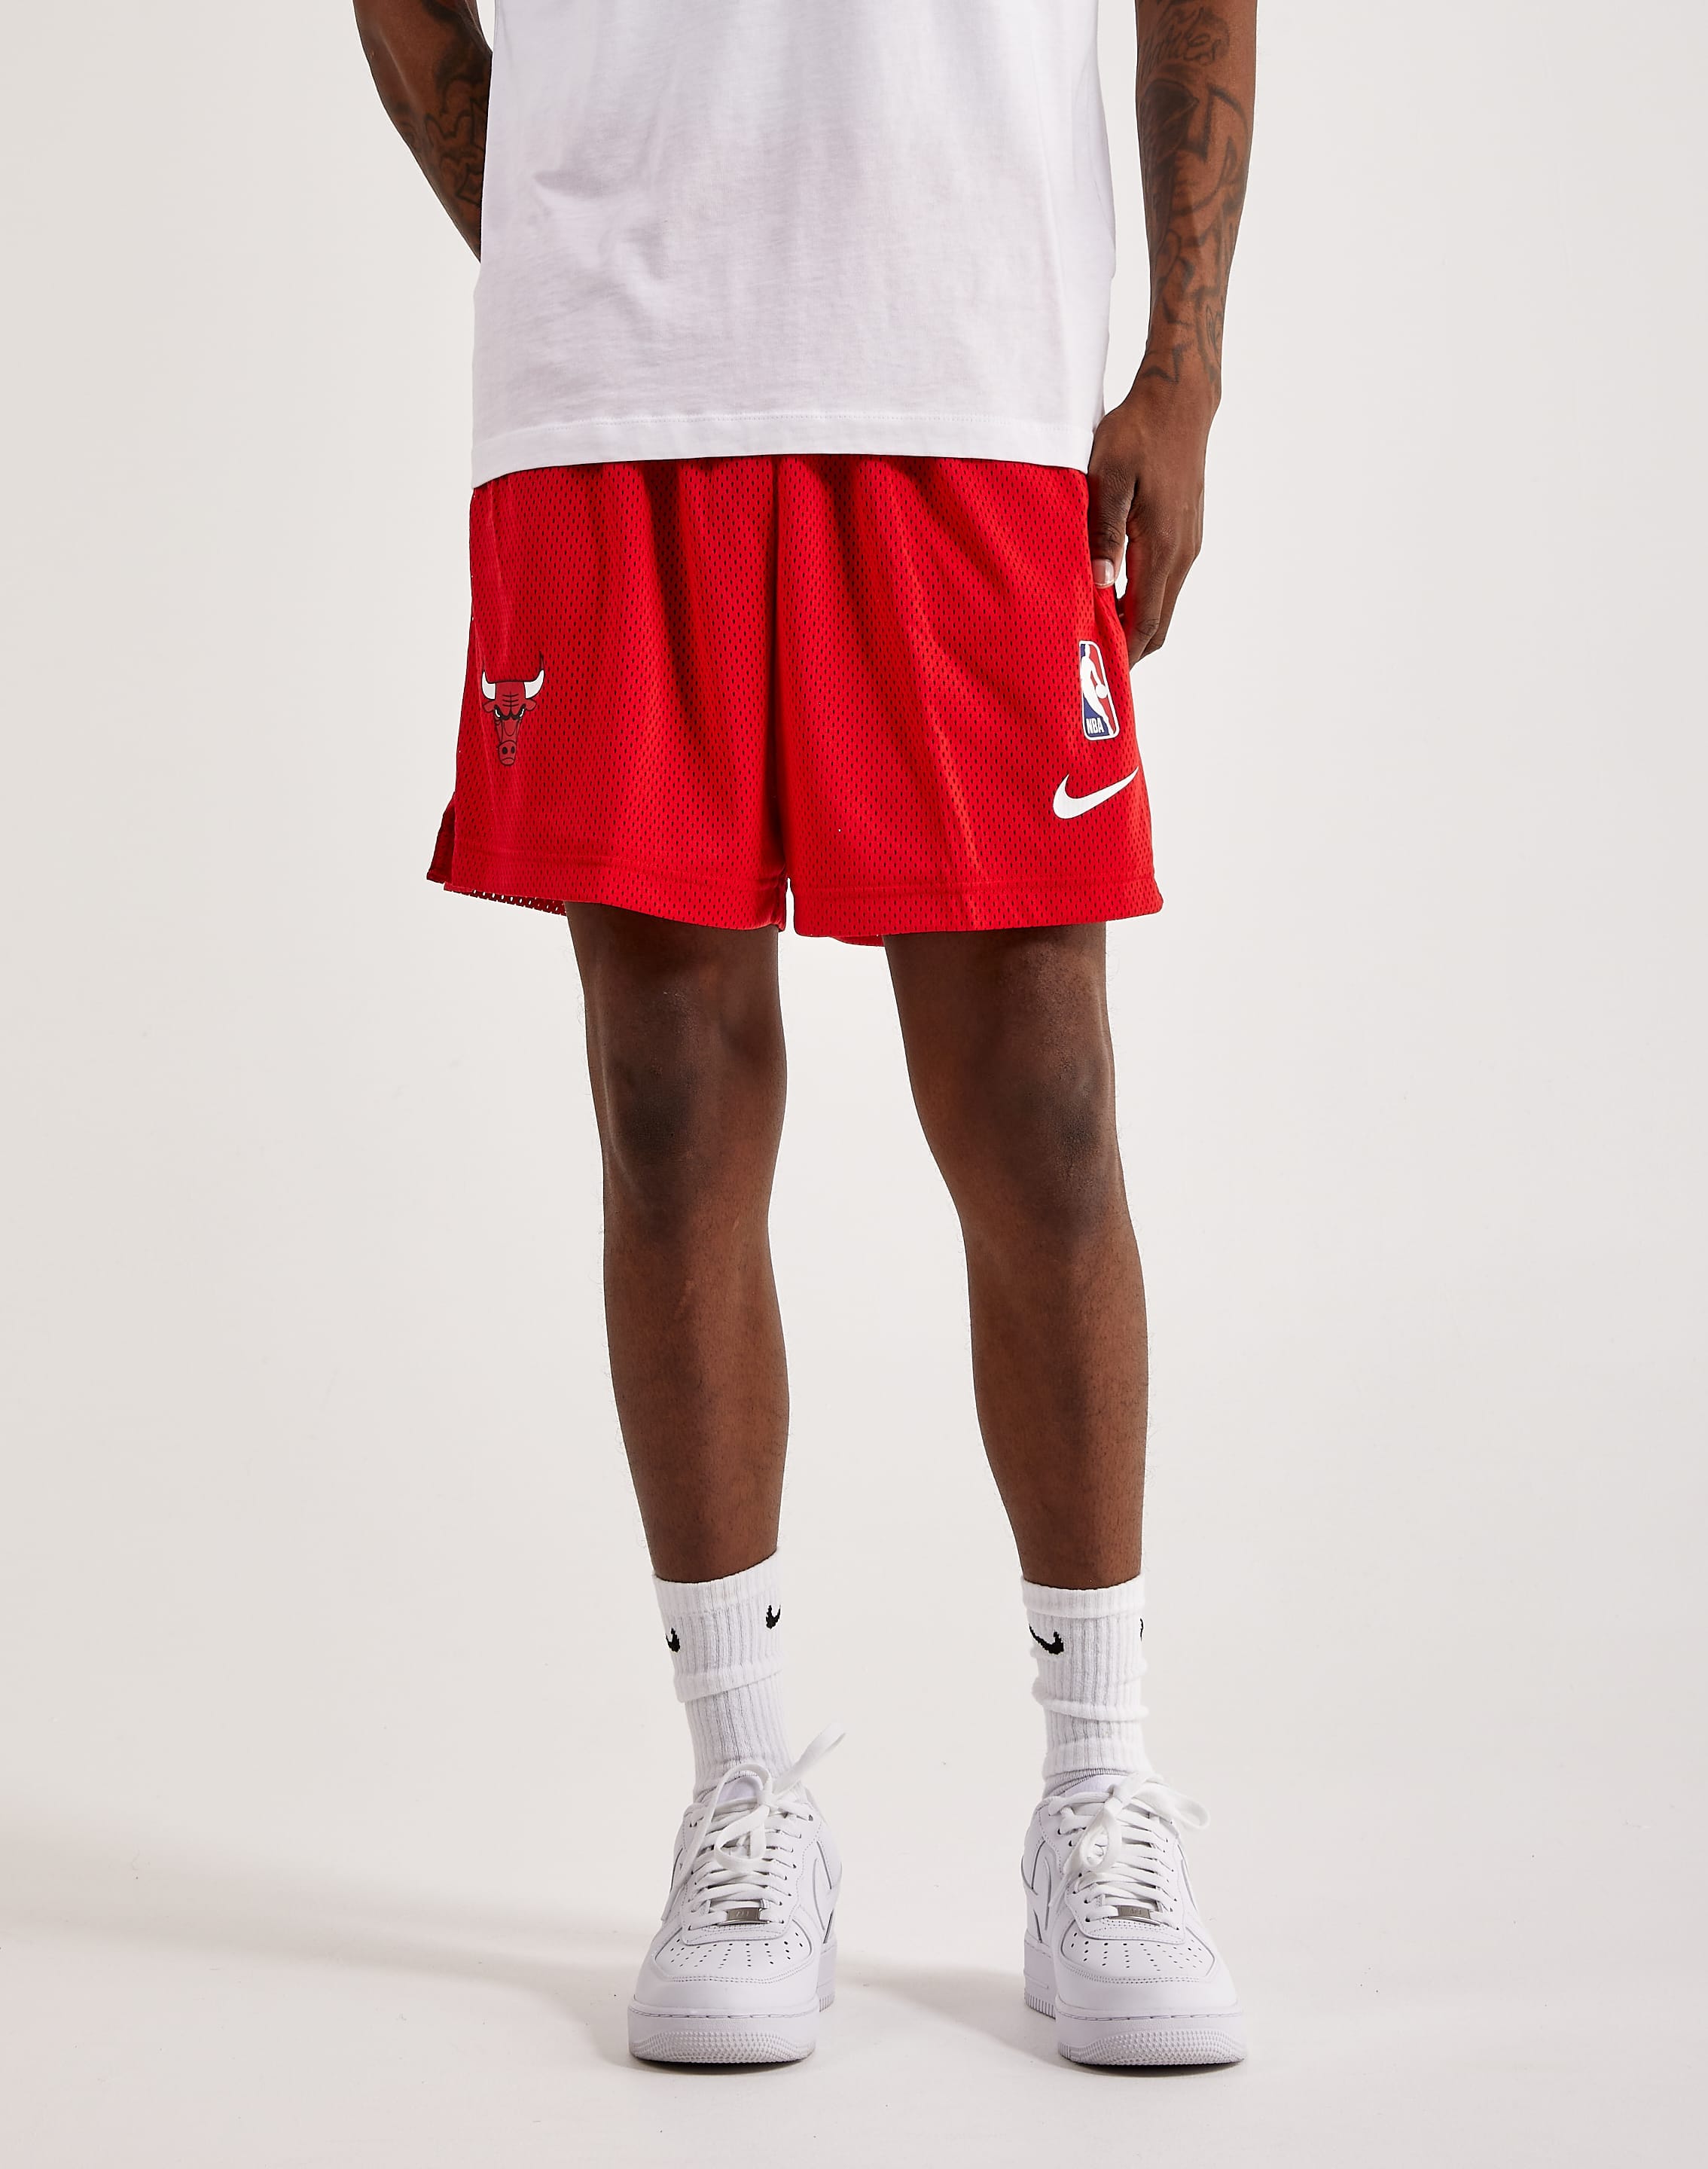 Nike Basketball NBA Chicago Bulls Dri-FIT shorts in red